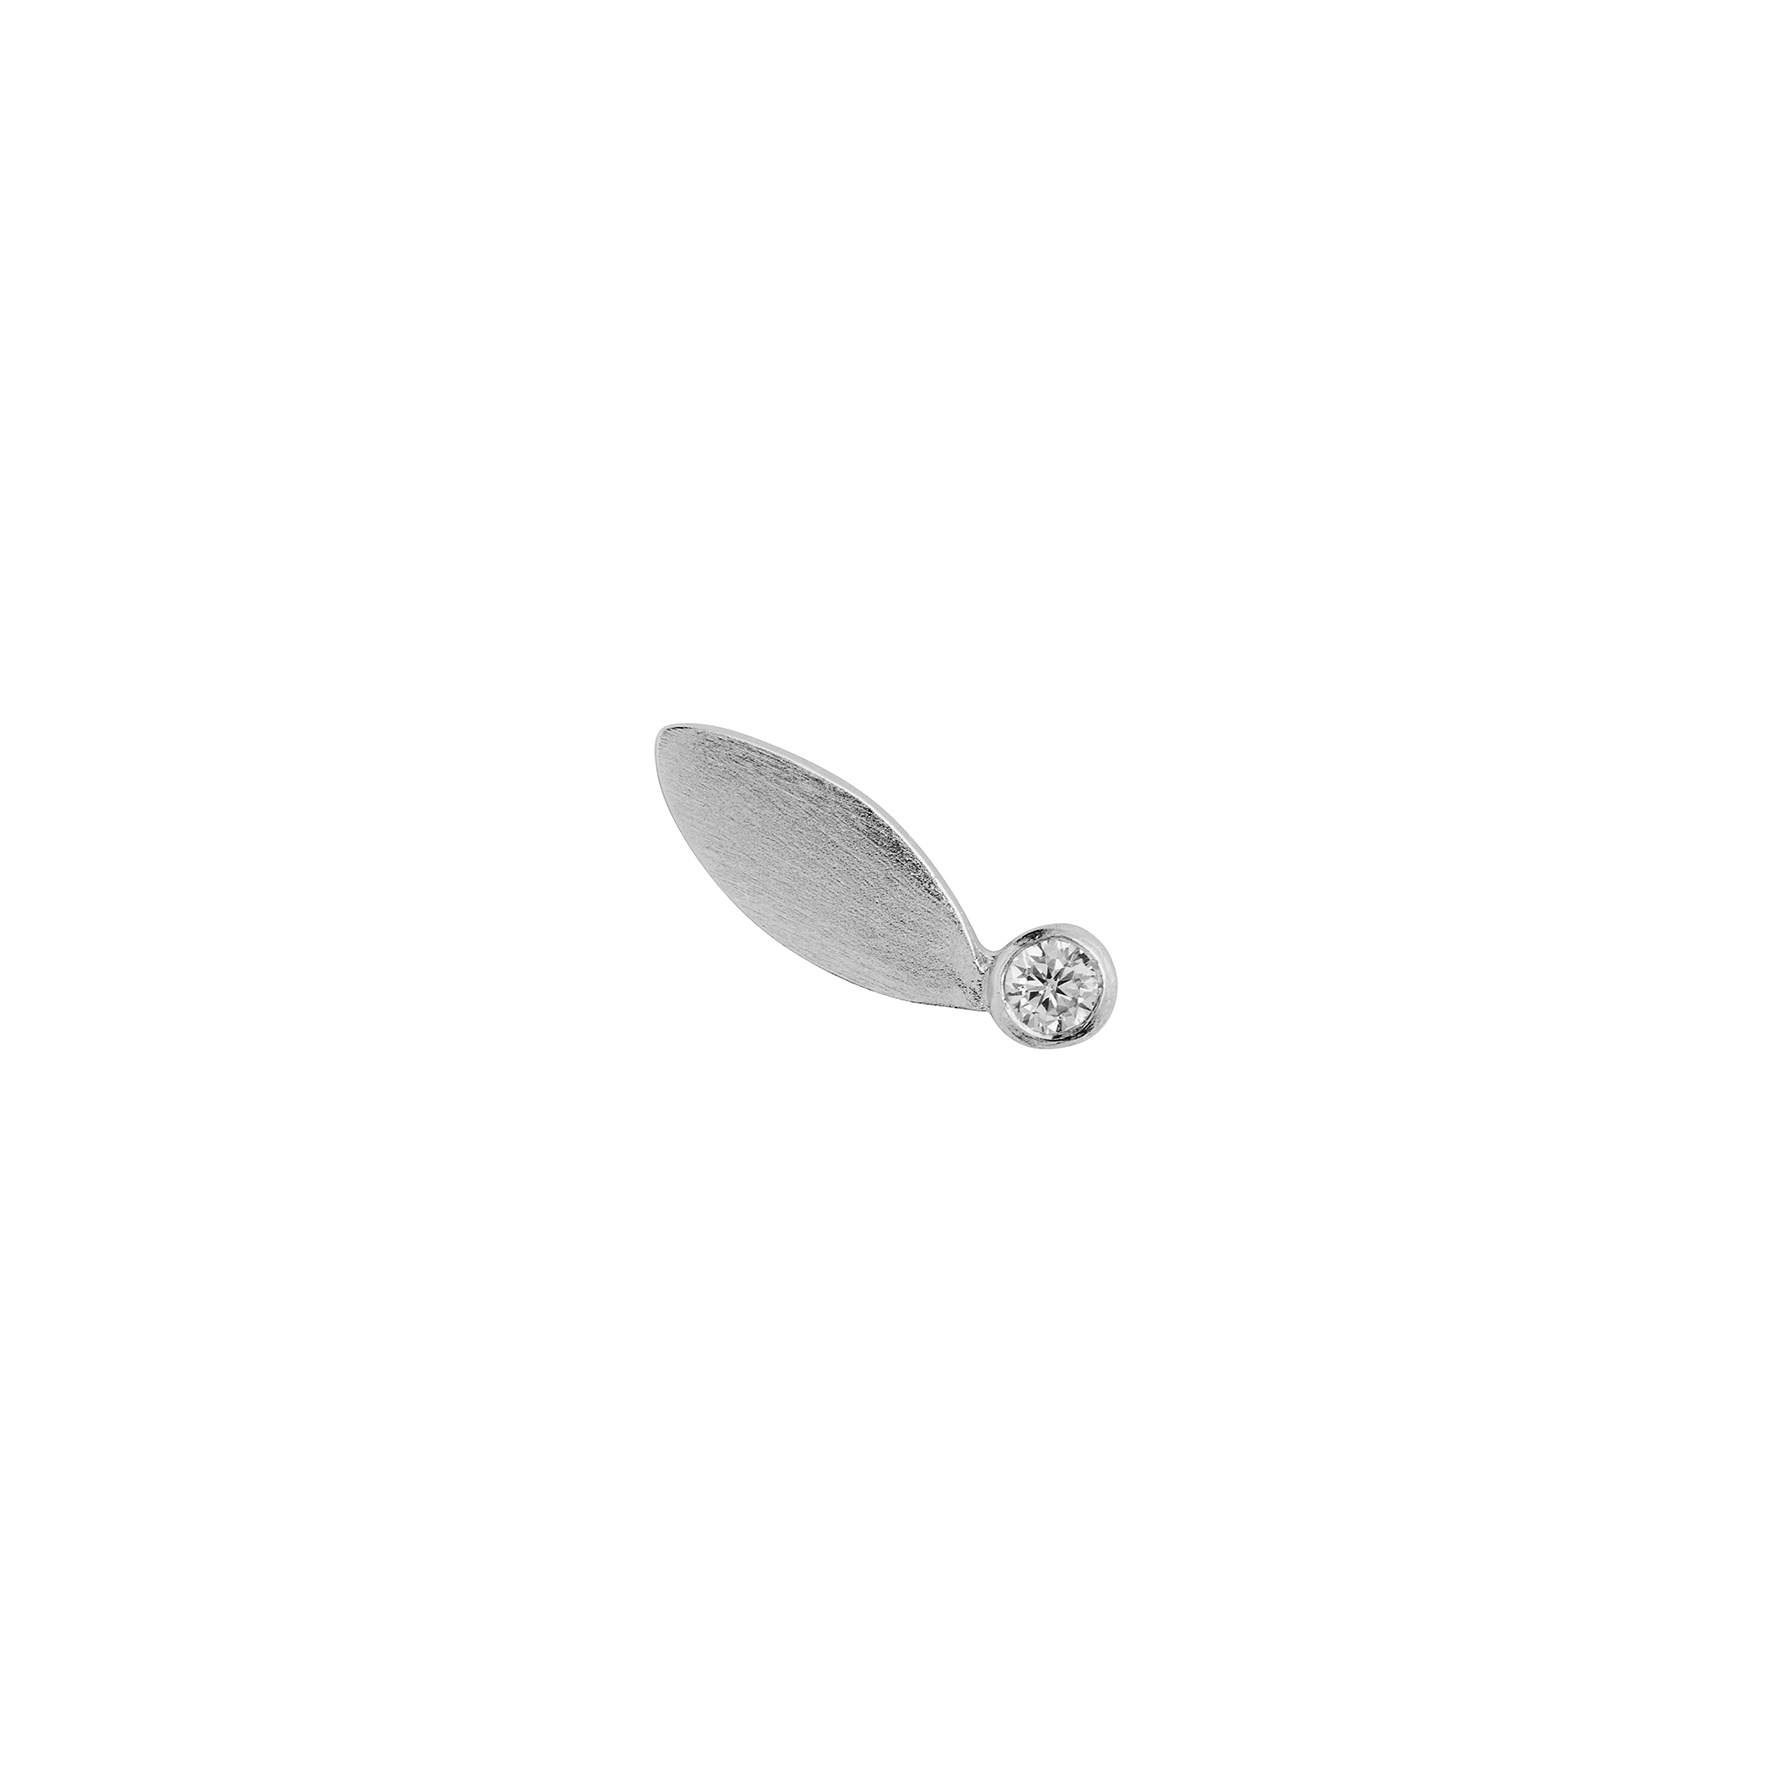 Big Dot Leaf Earstick Light Peridot von STINE A Jewelry in Silber Sterling 925|